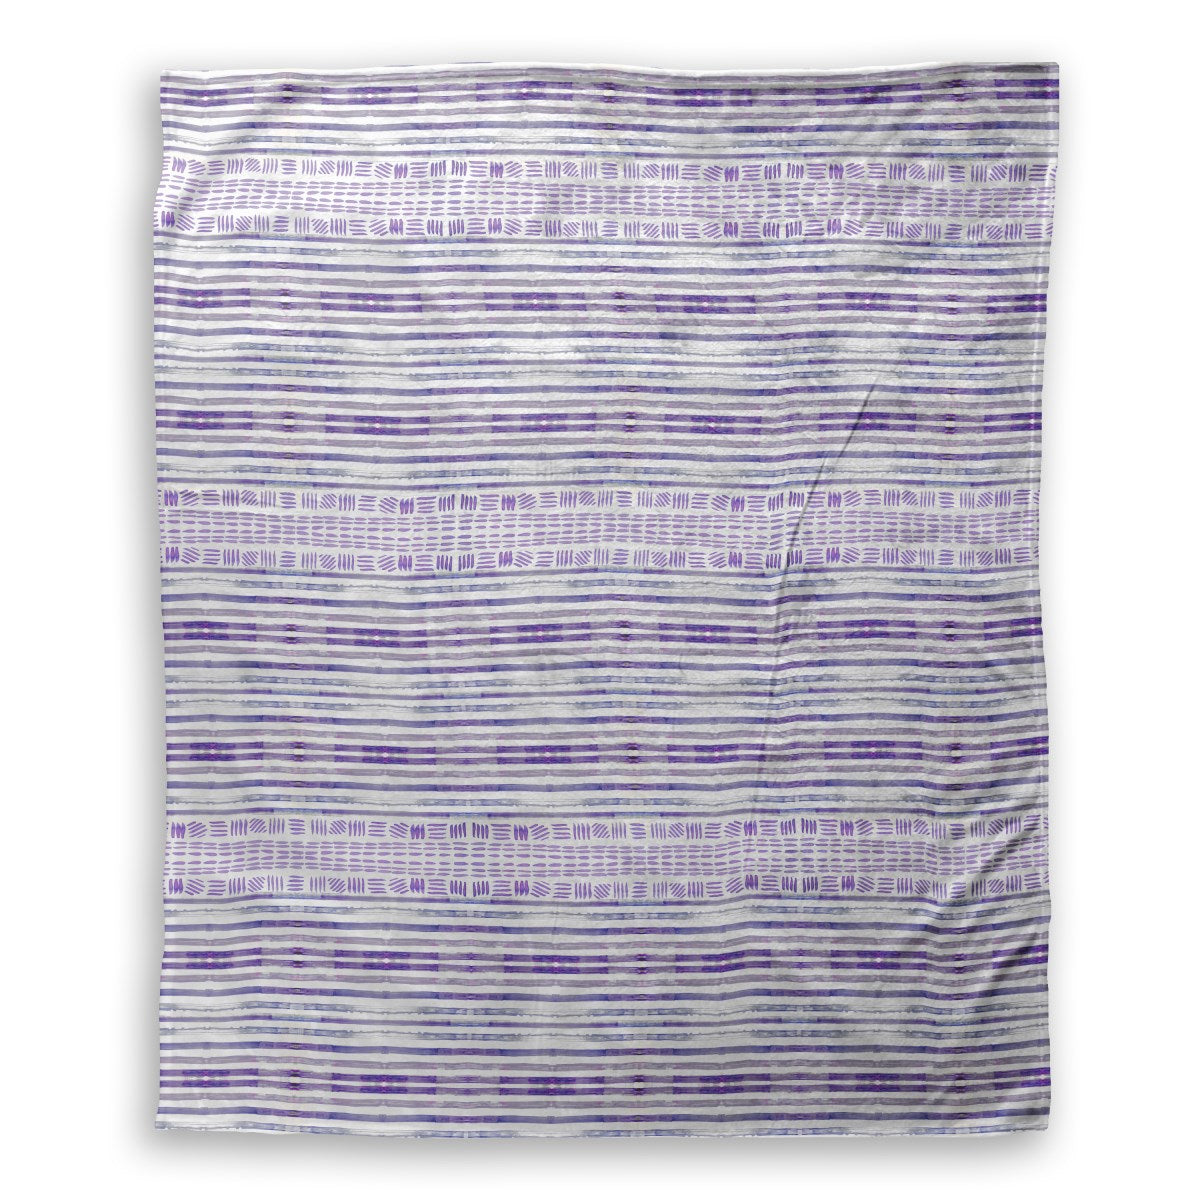 Moonlight Stripe throw blanket - small 50 x 60